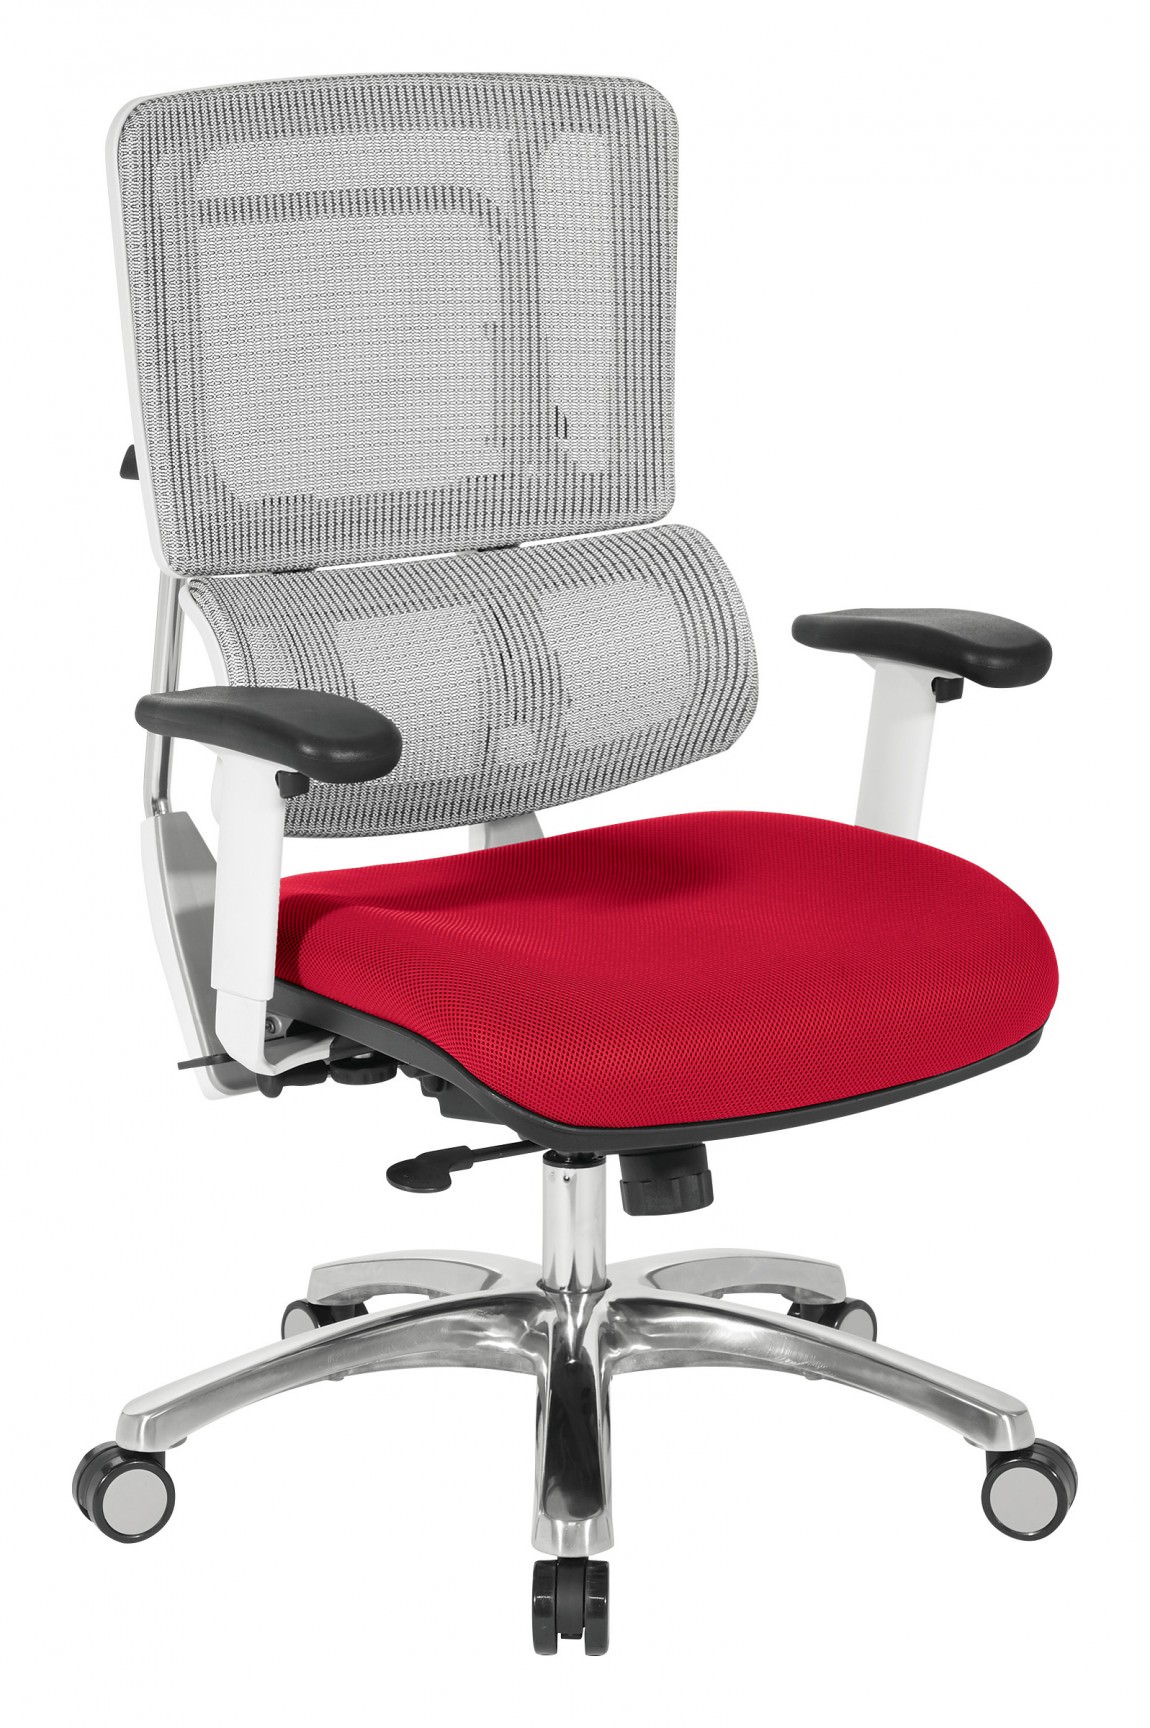 https://madisonliquidators.com/images/p/1150/25846-tall-ergonomic-office-chair-3.jpg